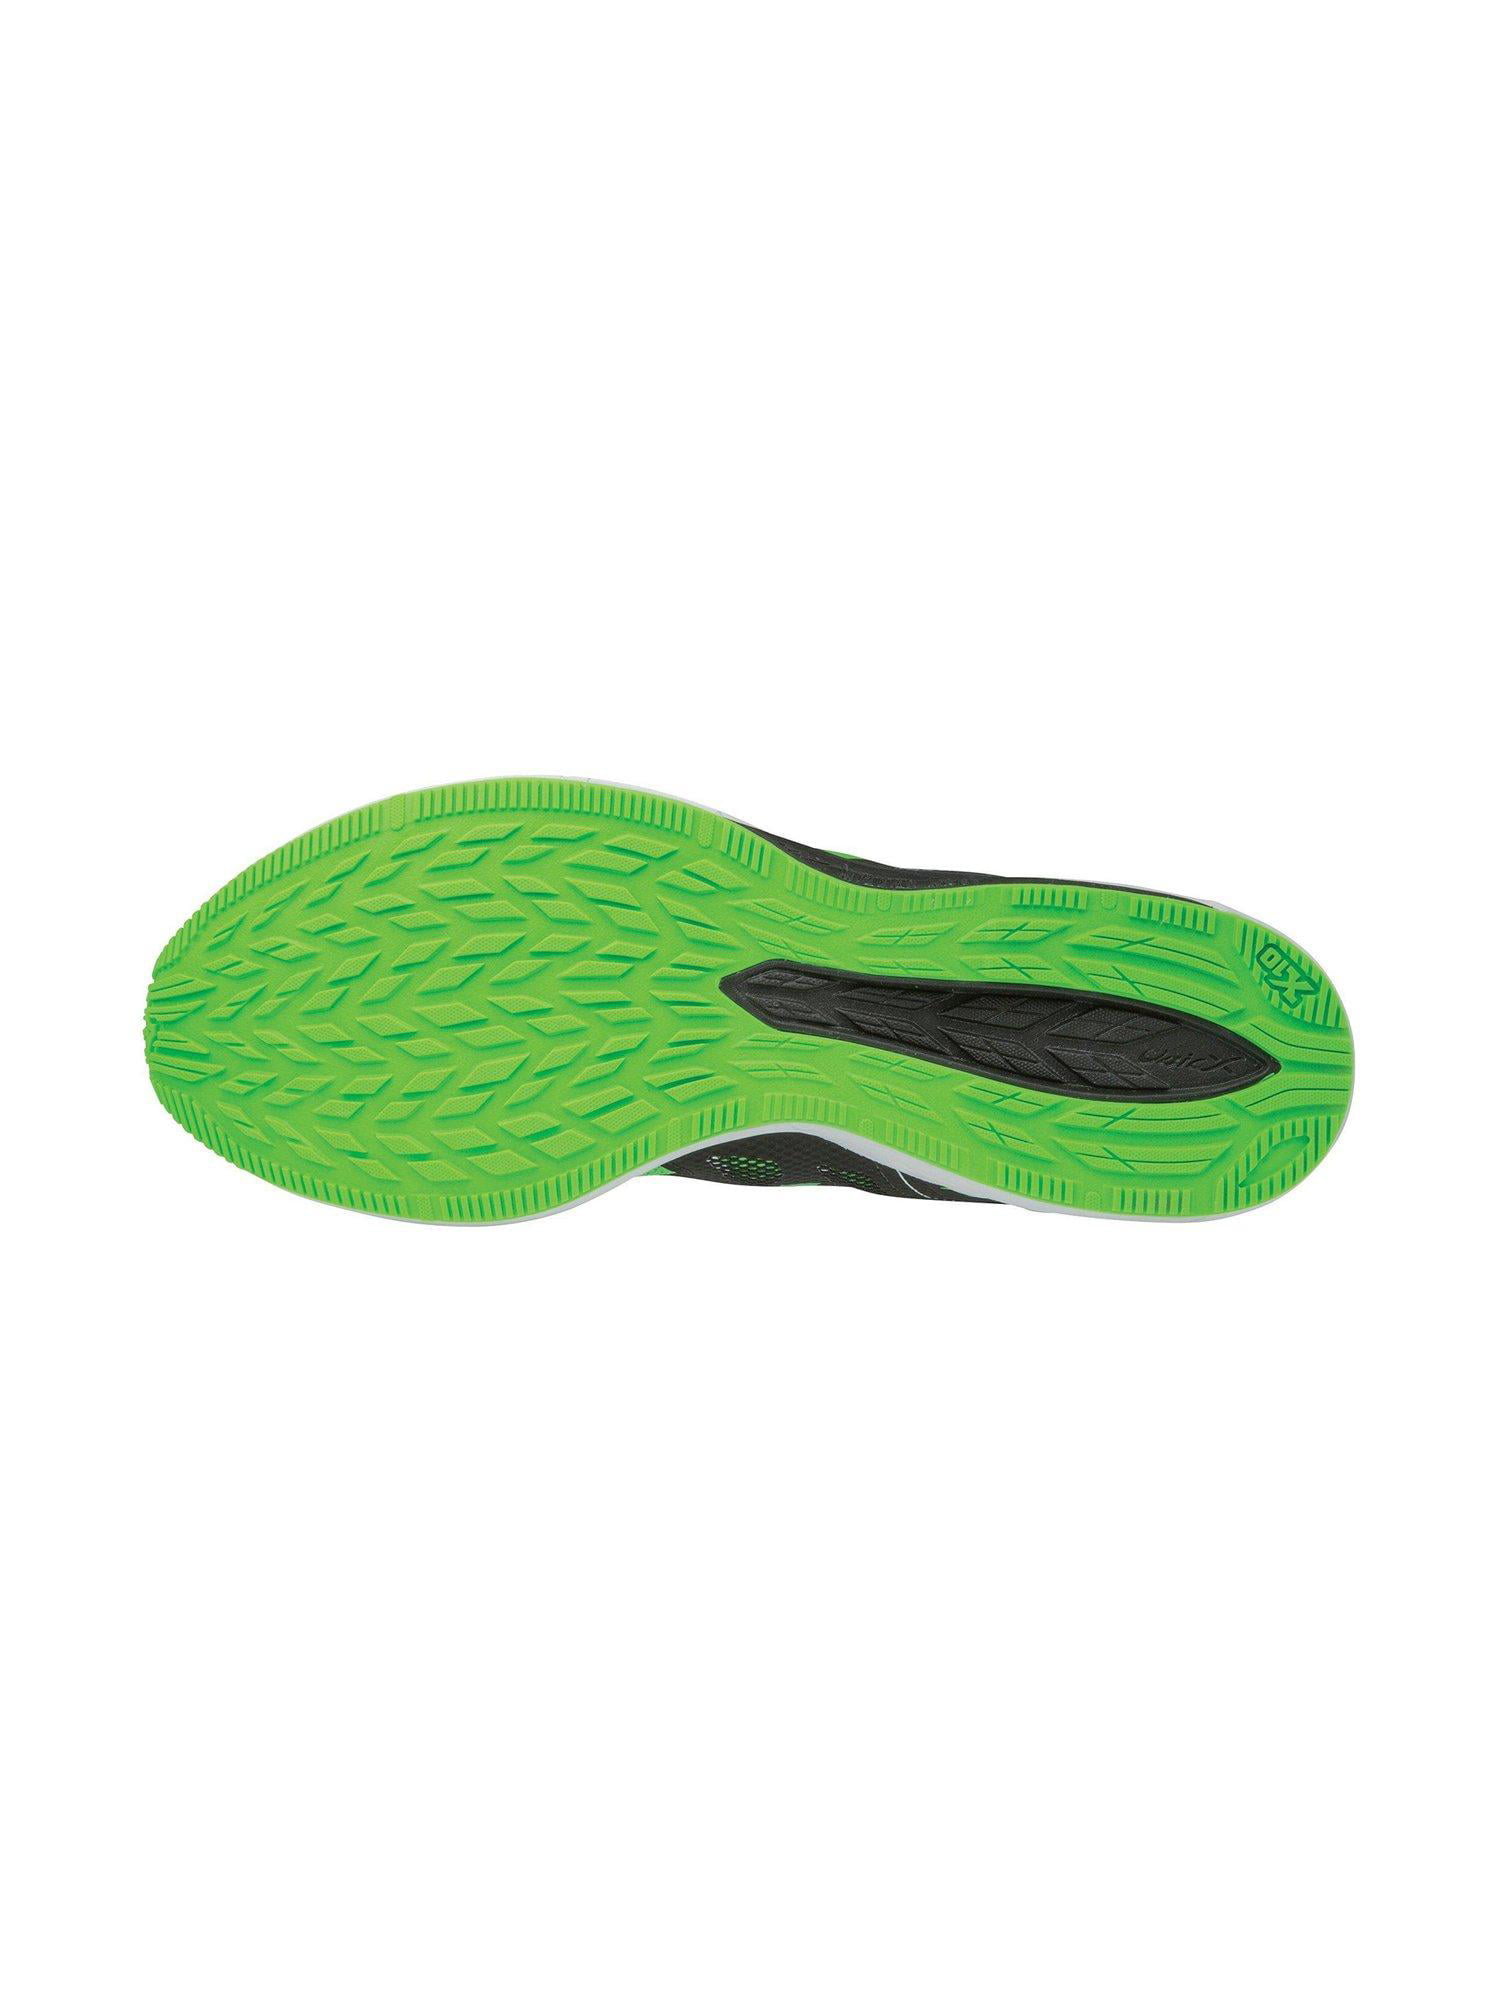 Mizuno Wave Sonic Running Shoes Men's J1GC173410 Neon Green White Black 